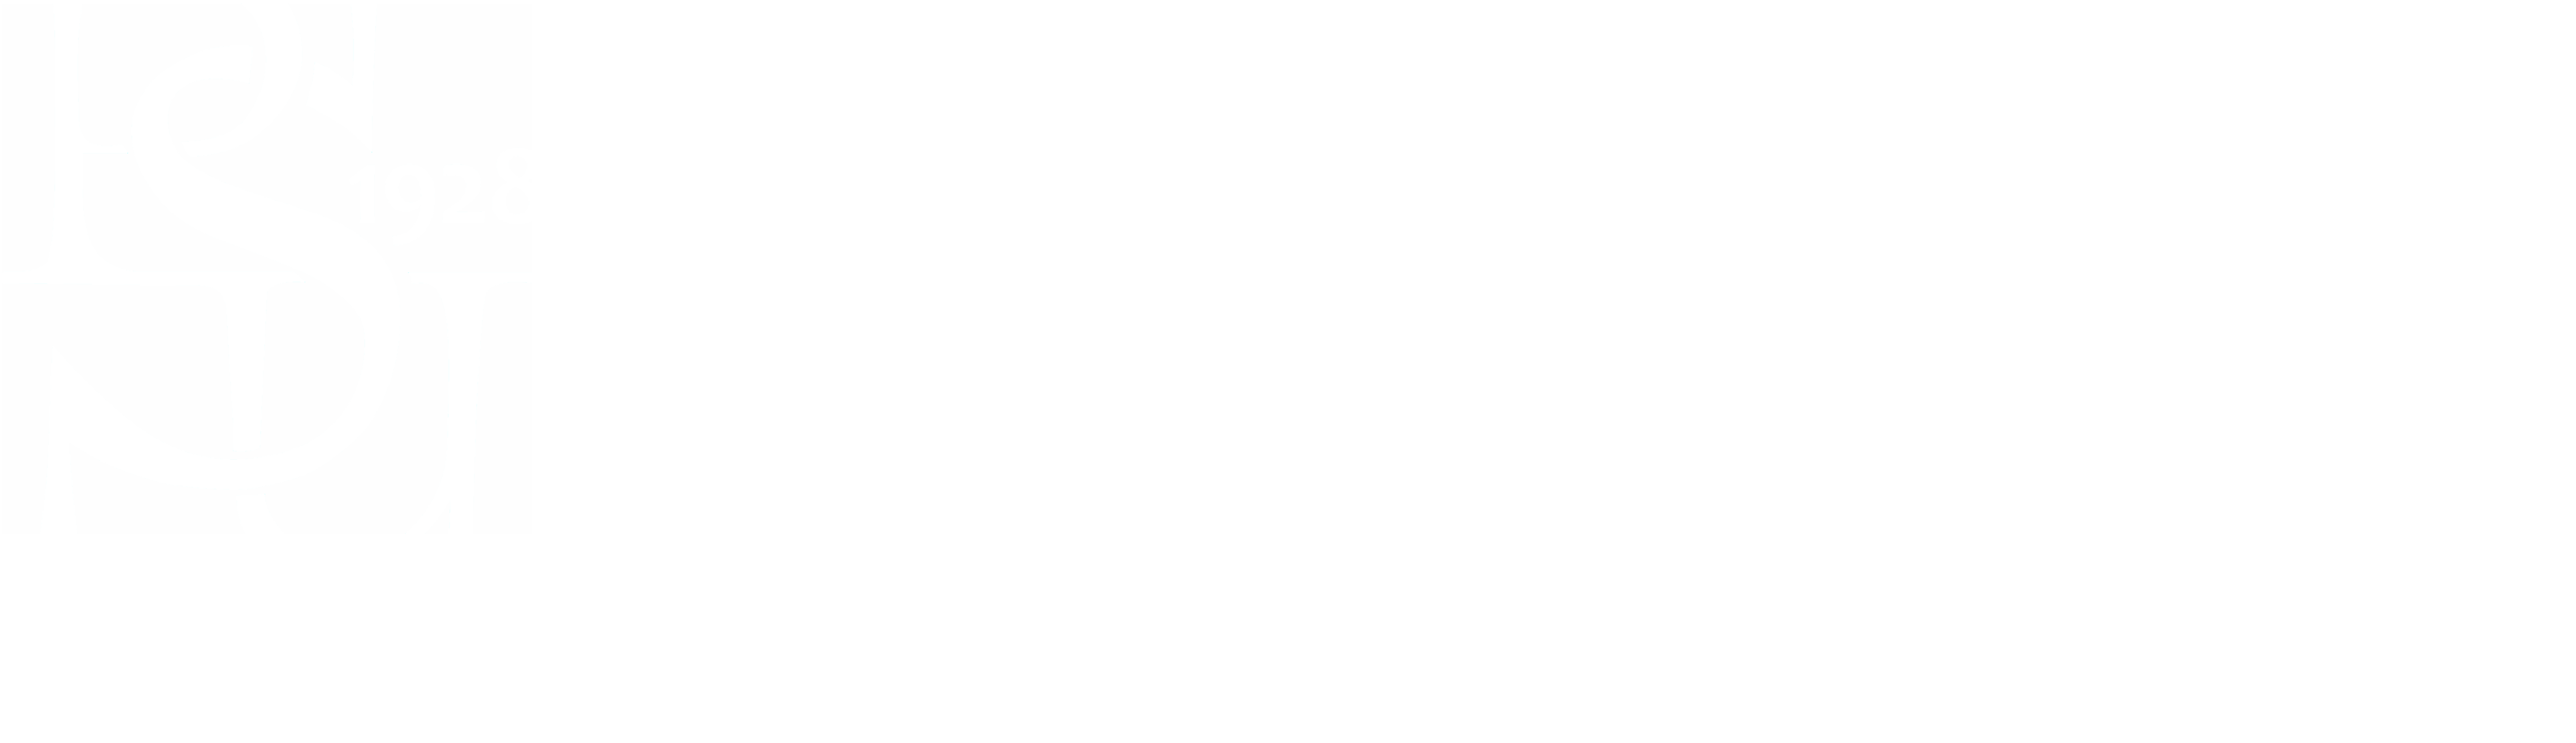 PSU logos based on golden ratio-7 (1)